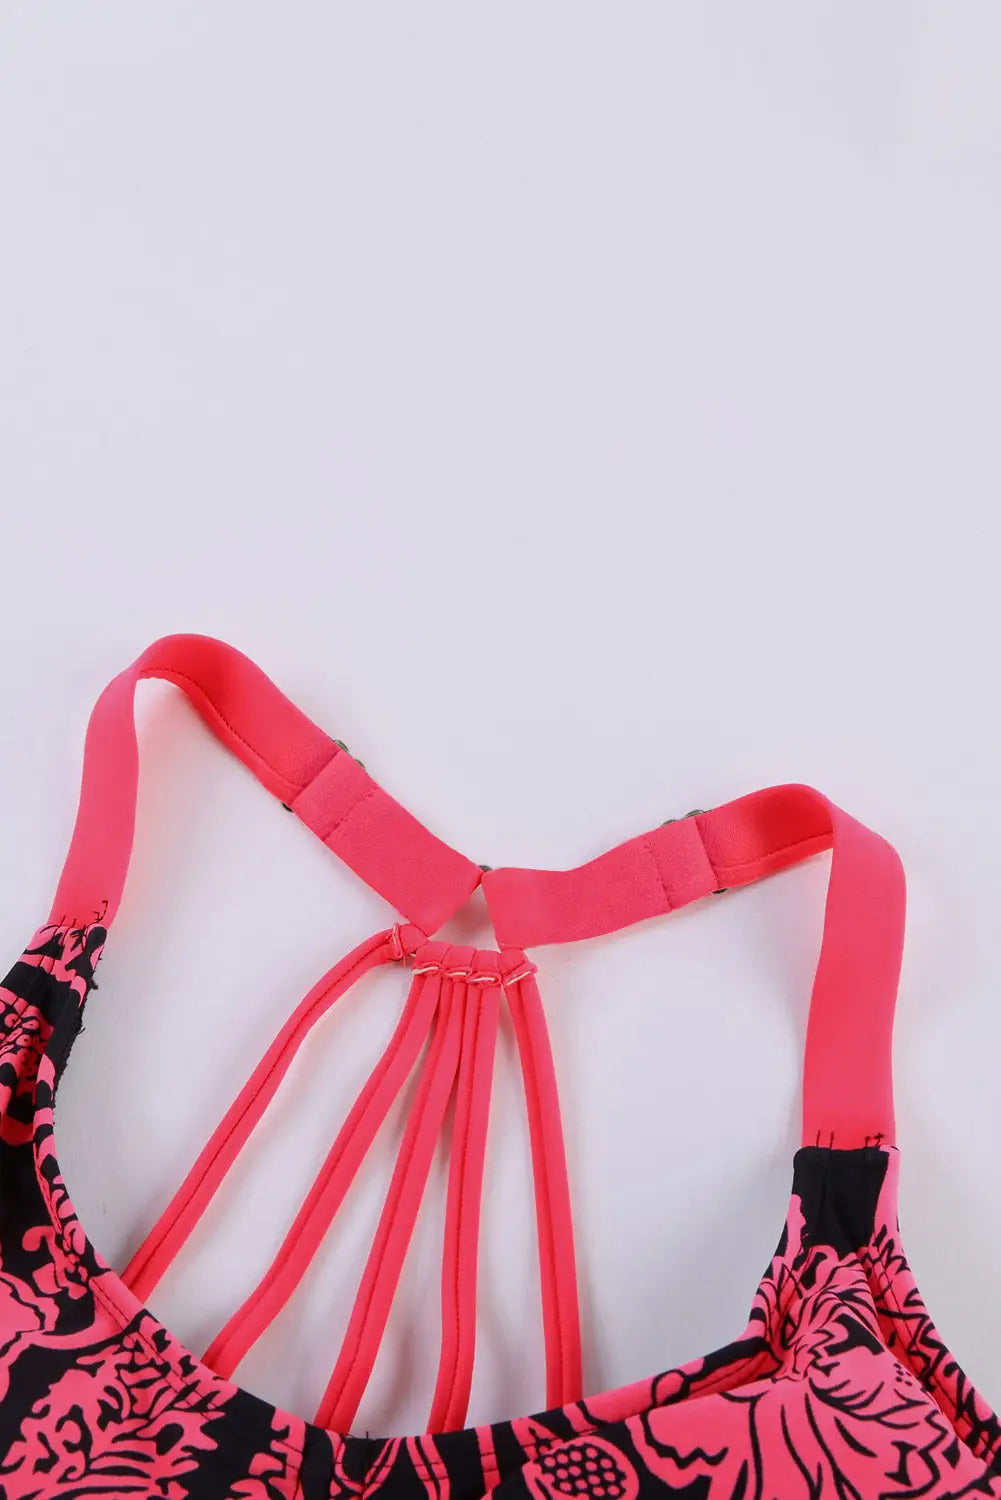 Red floral printed blouson tankini top - 3xl / 82% nylon + 18% spandex - bikini tops